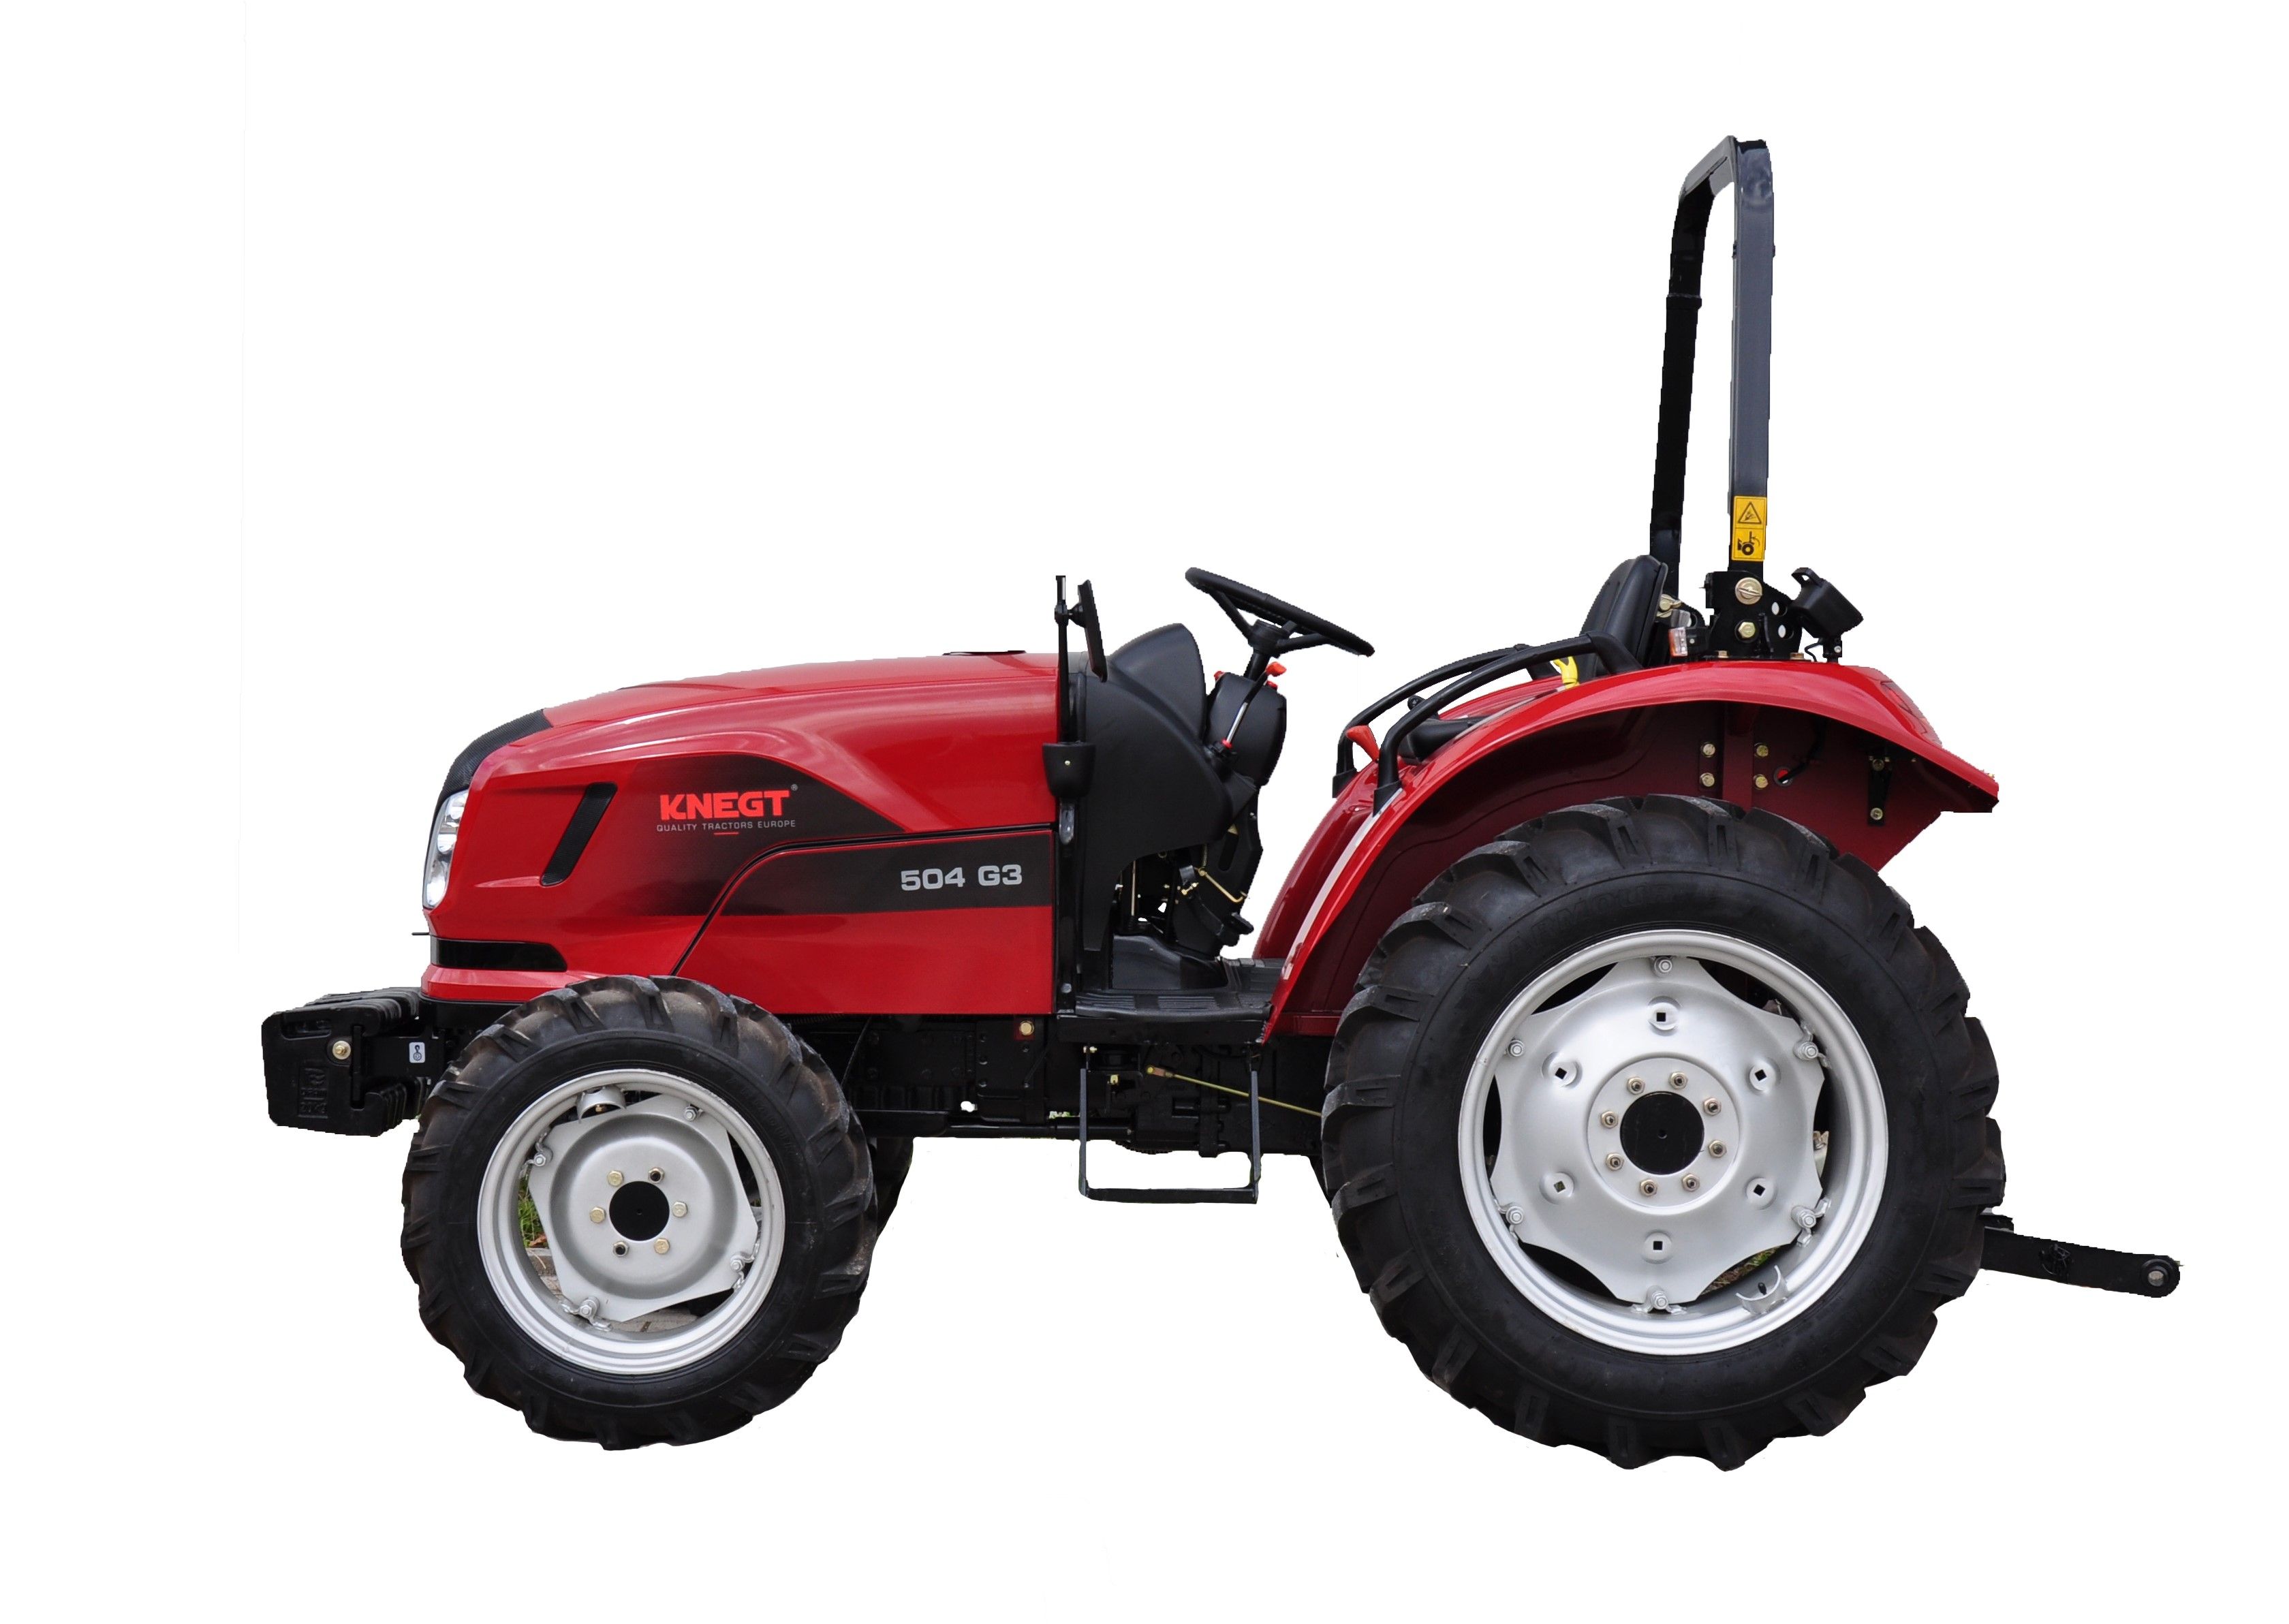 504 g3 - tracteur agricole - knegt - puissance 50 ch_0